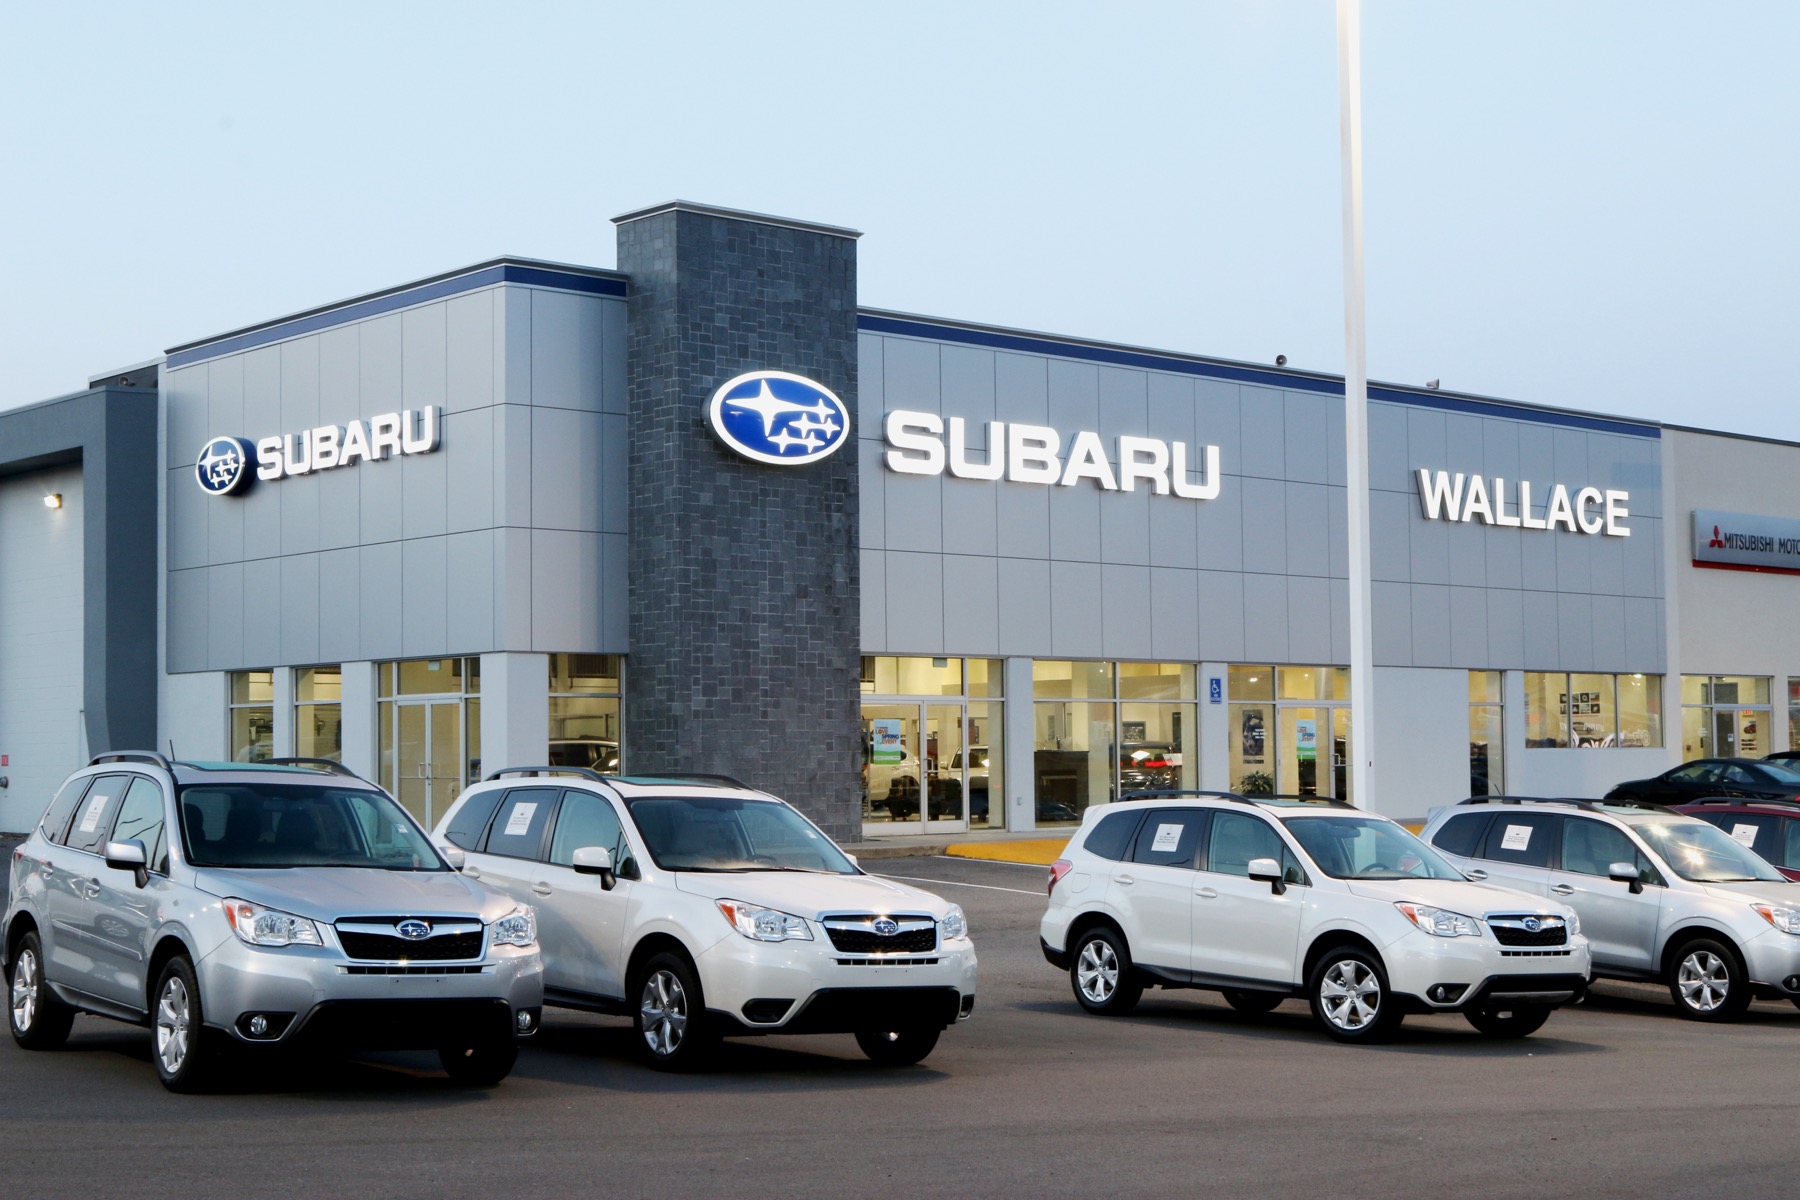 Shari – Wallace Subaru cover photo